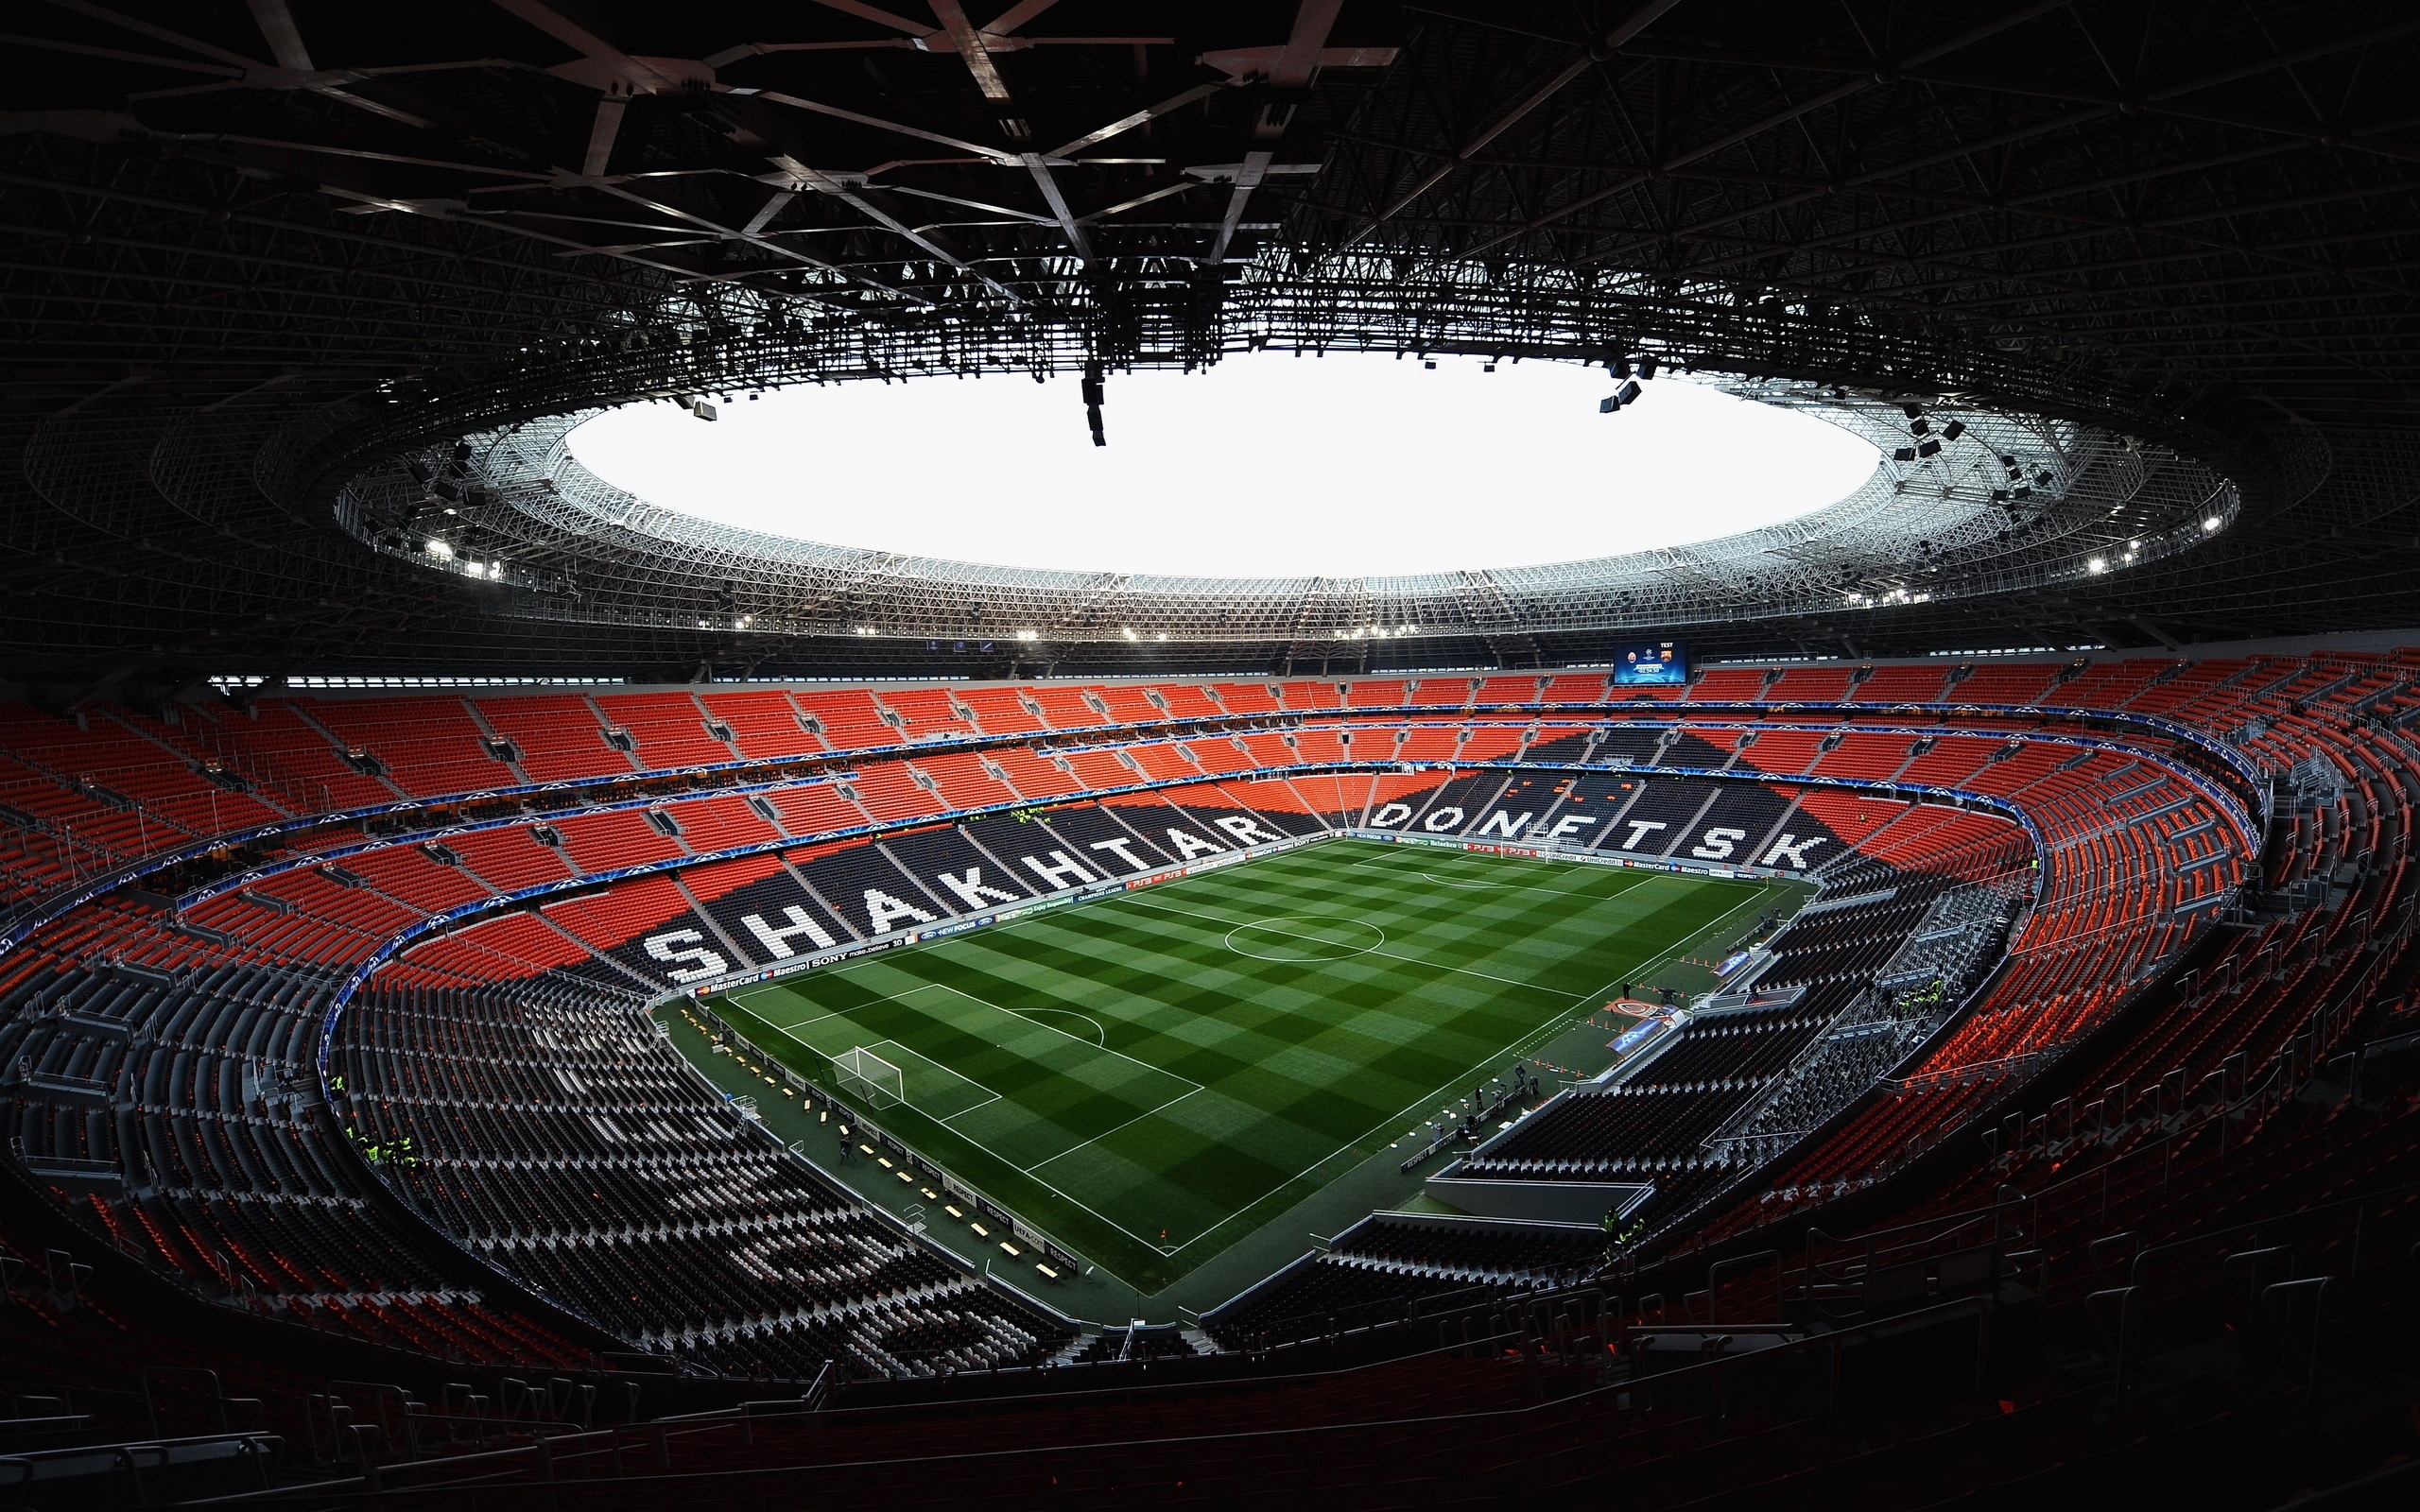 Shakhtar Donetsk Stadium for 2560 x 1600 widescreen resolution